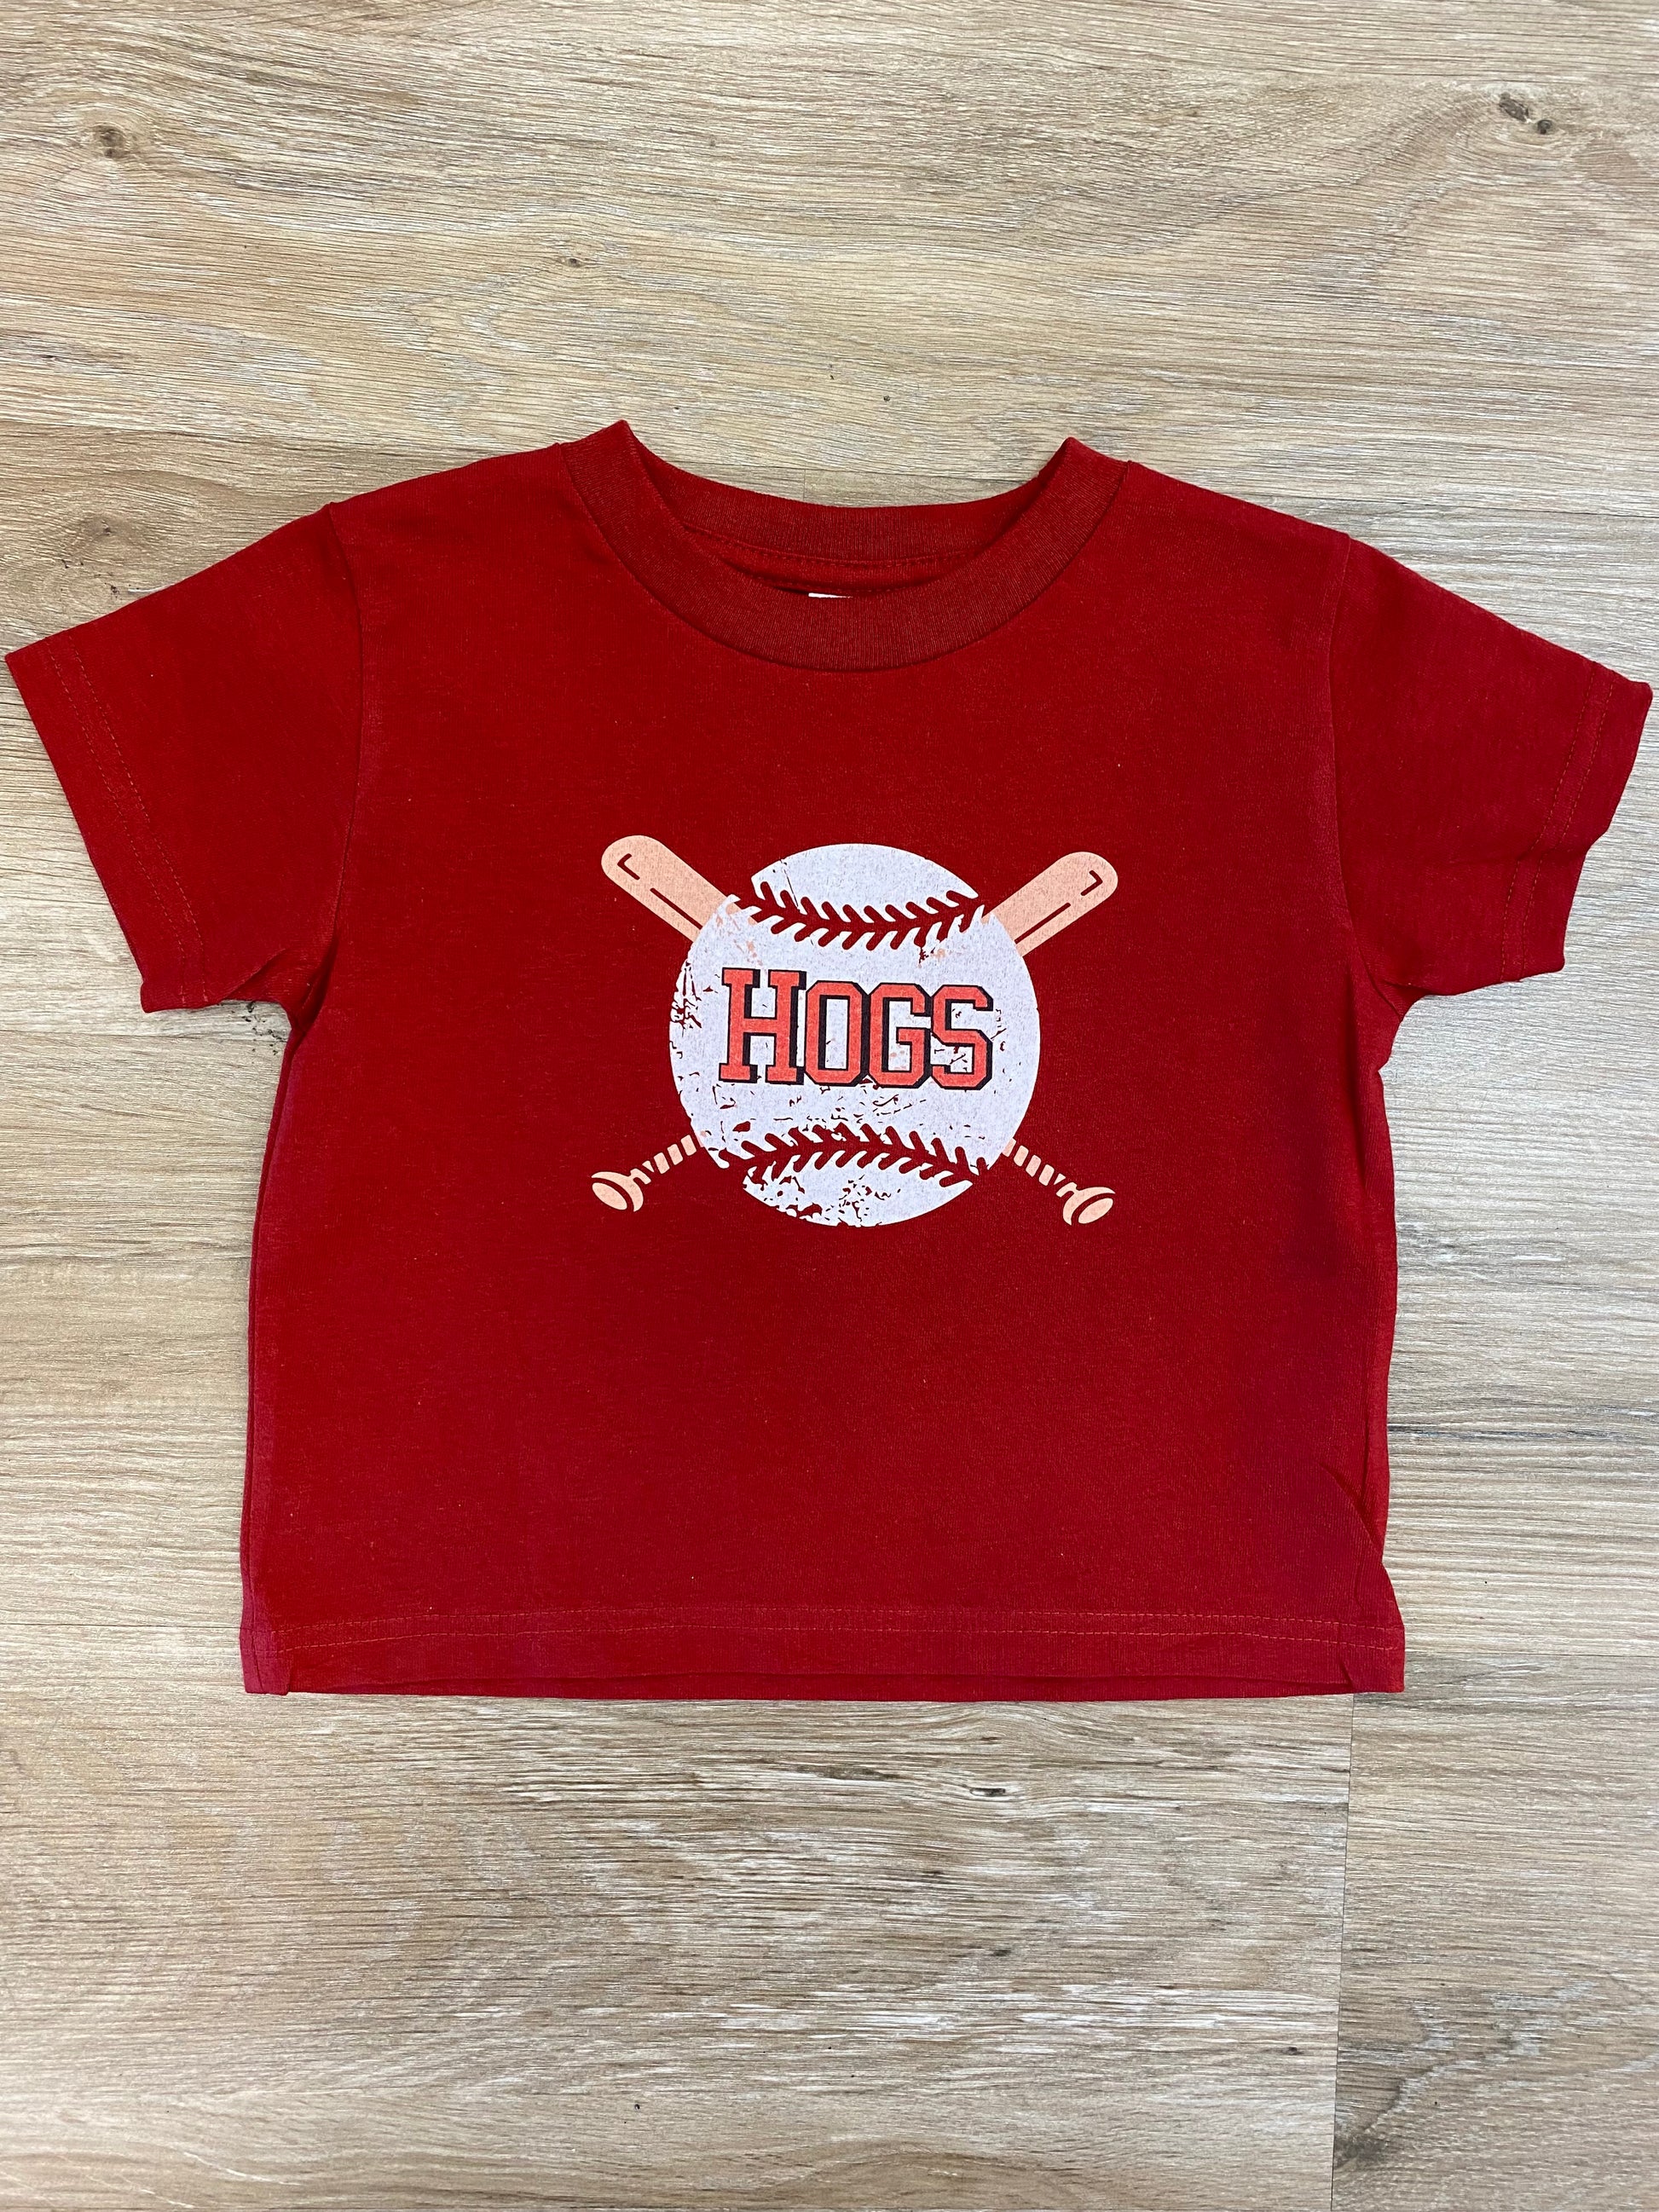 Hogs Baseball Shirt 2 - Doodlebug's Children's Boutique